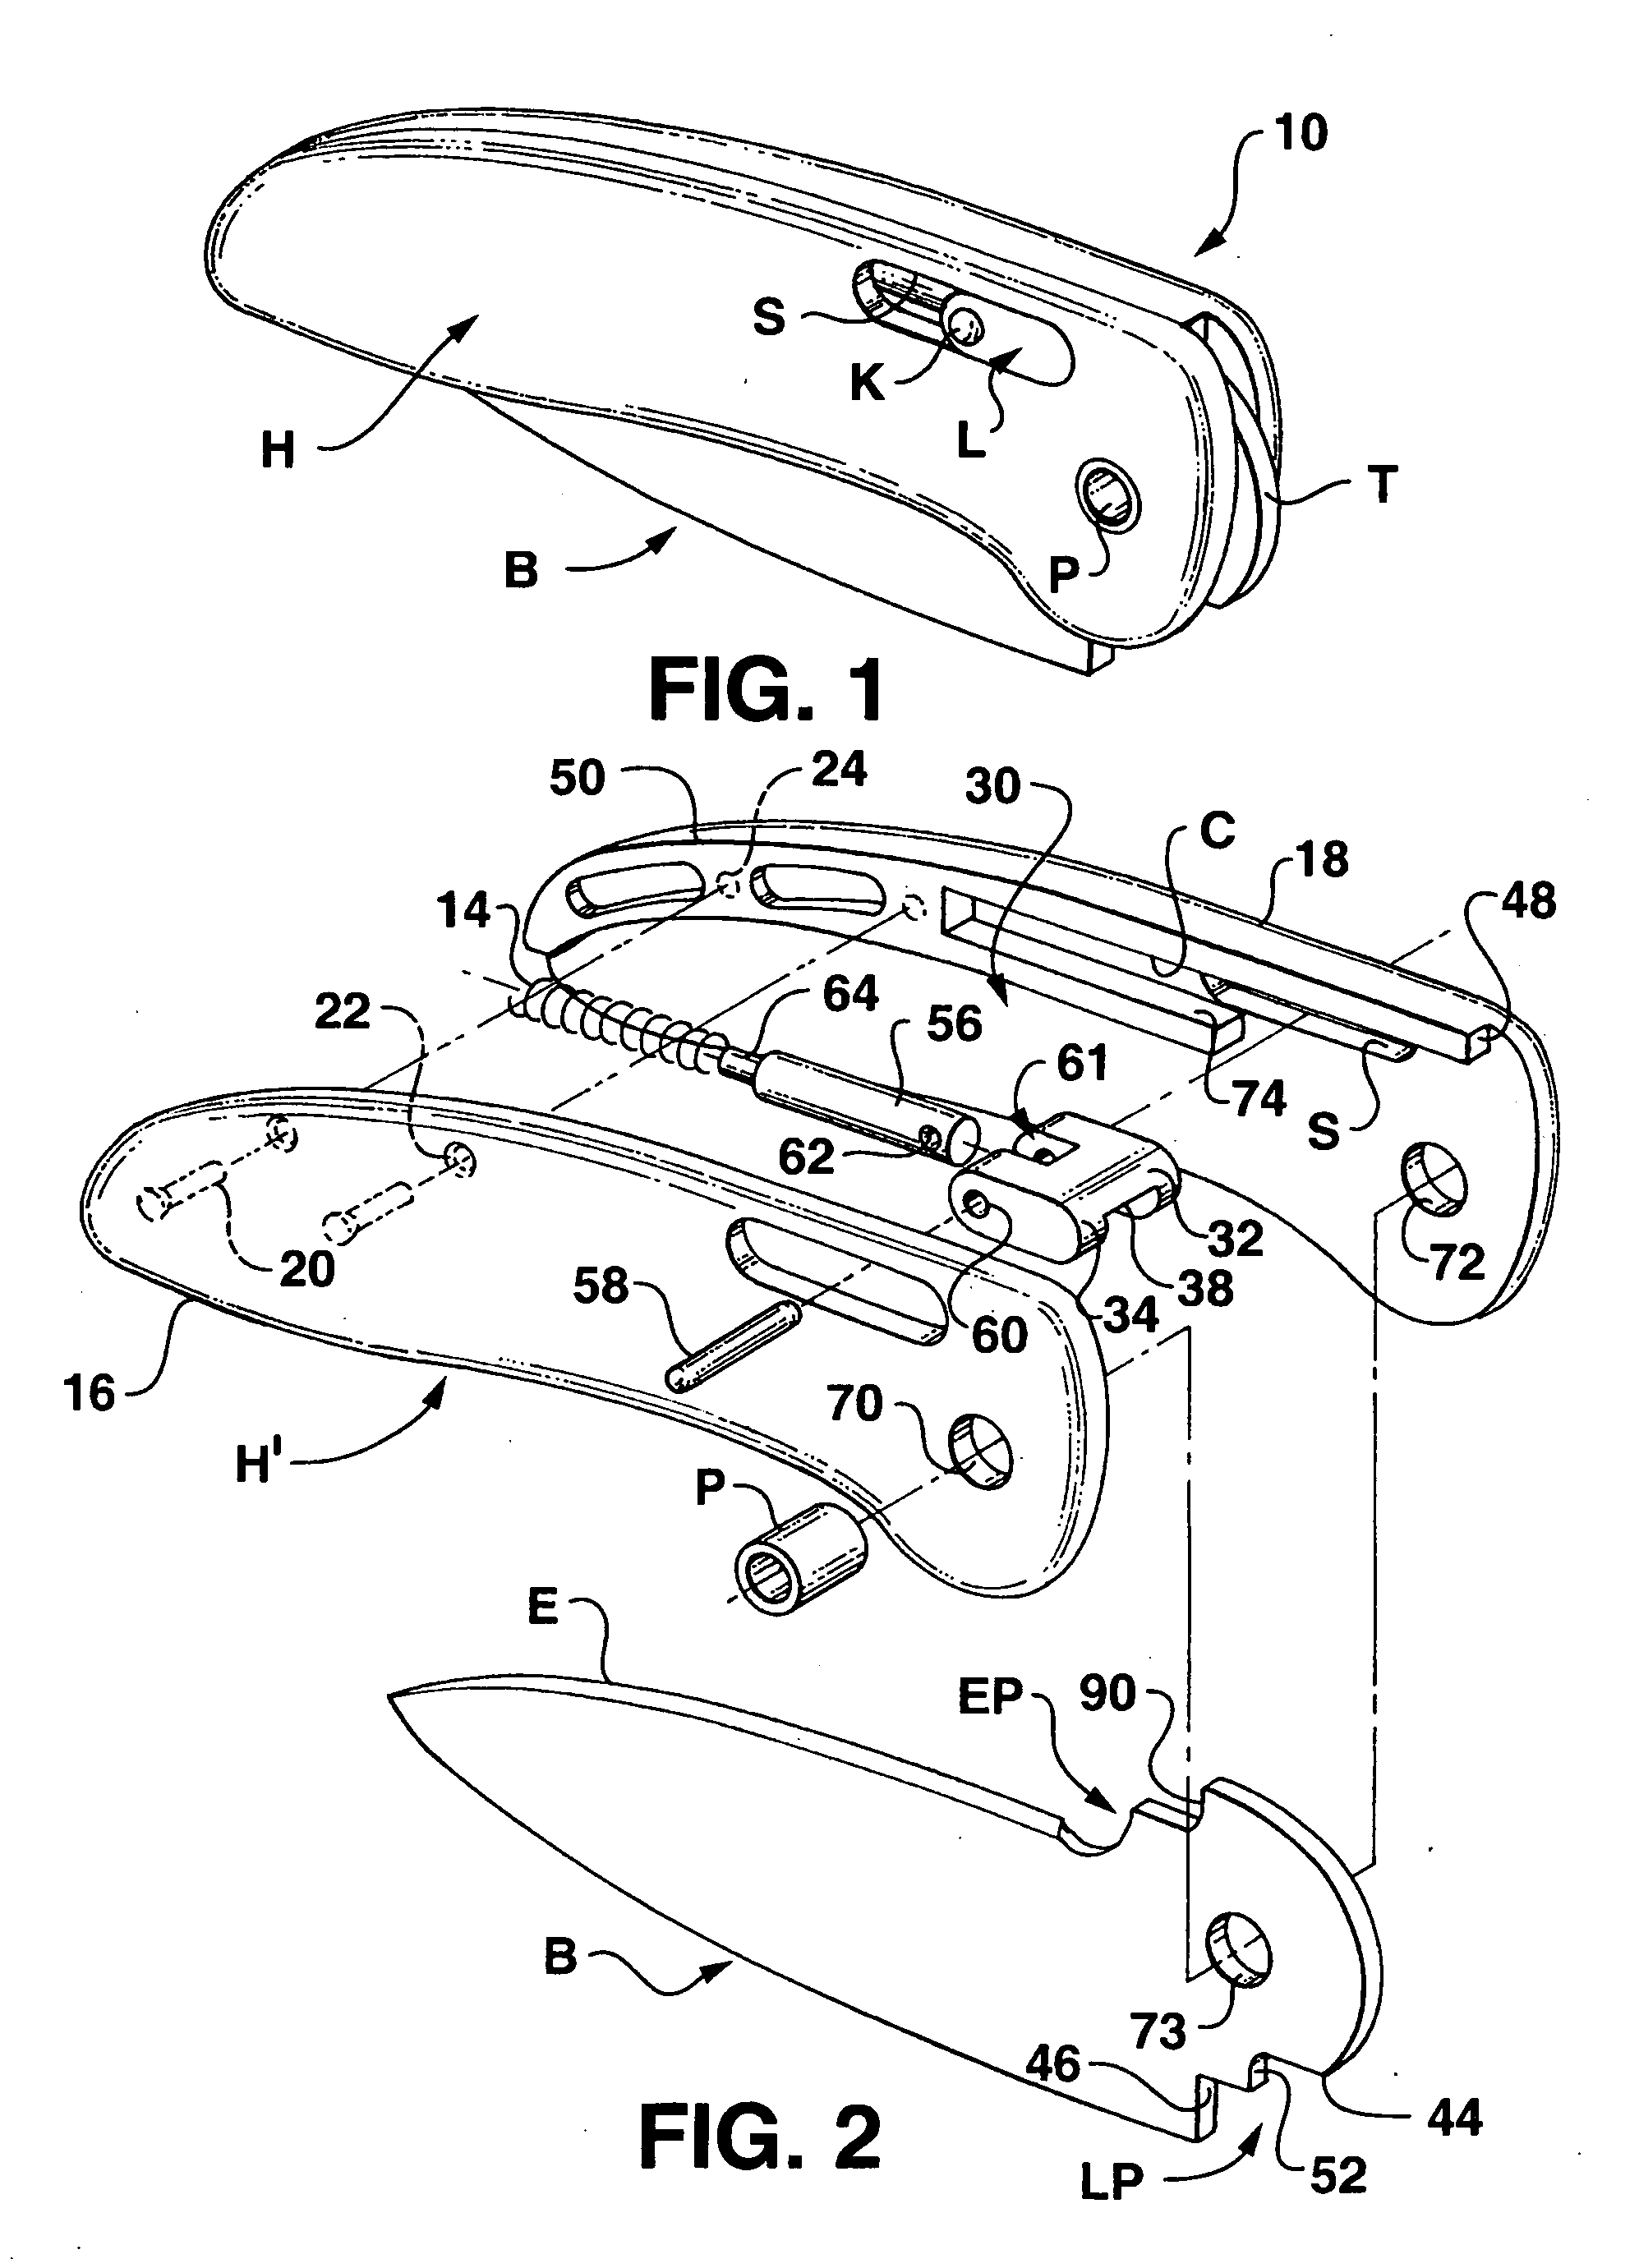 Folding knife with locking blade